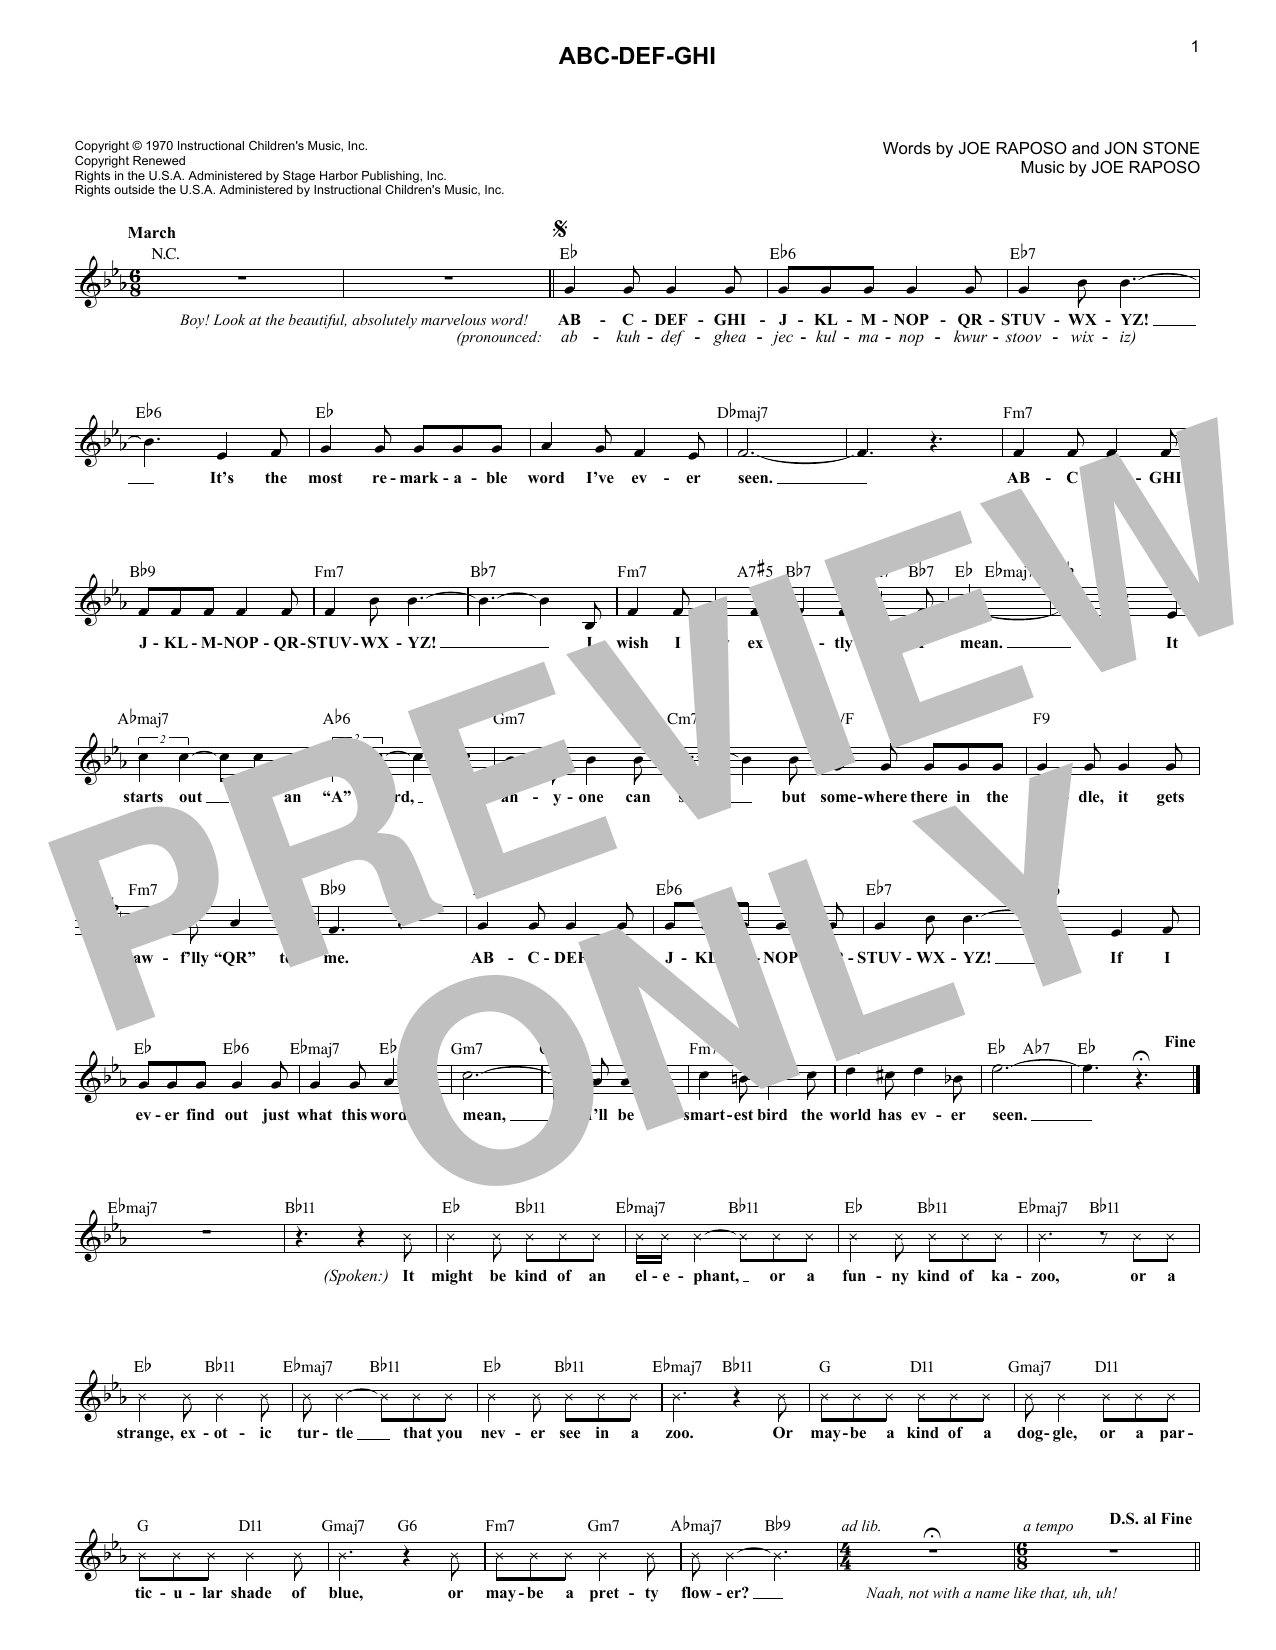 Joe Raposo ABC-DEF-GHI Sheet Music Notes & Chords for Melody Line, Lyrics & Chords - Download or Print PDF